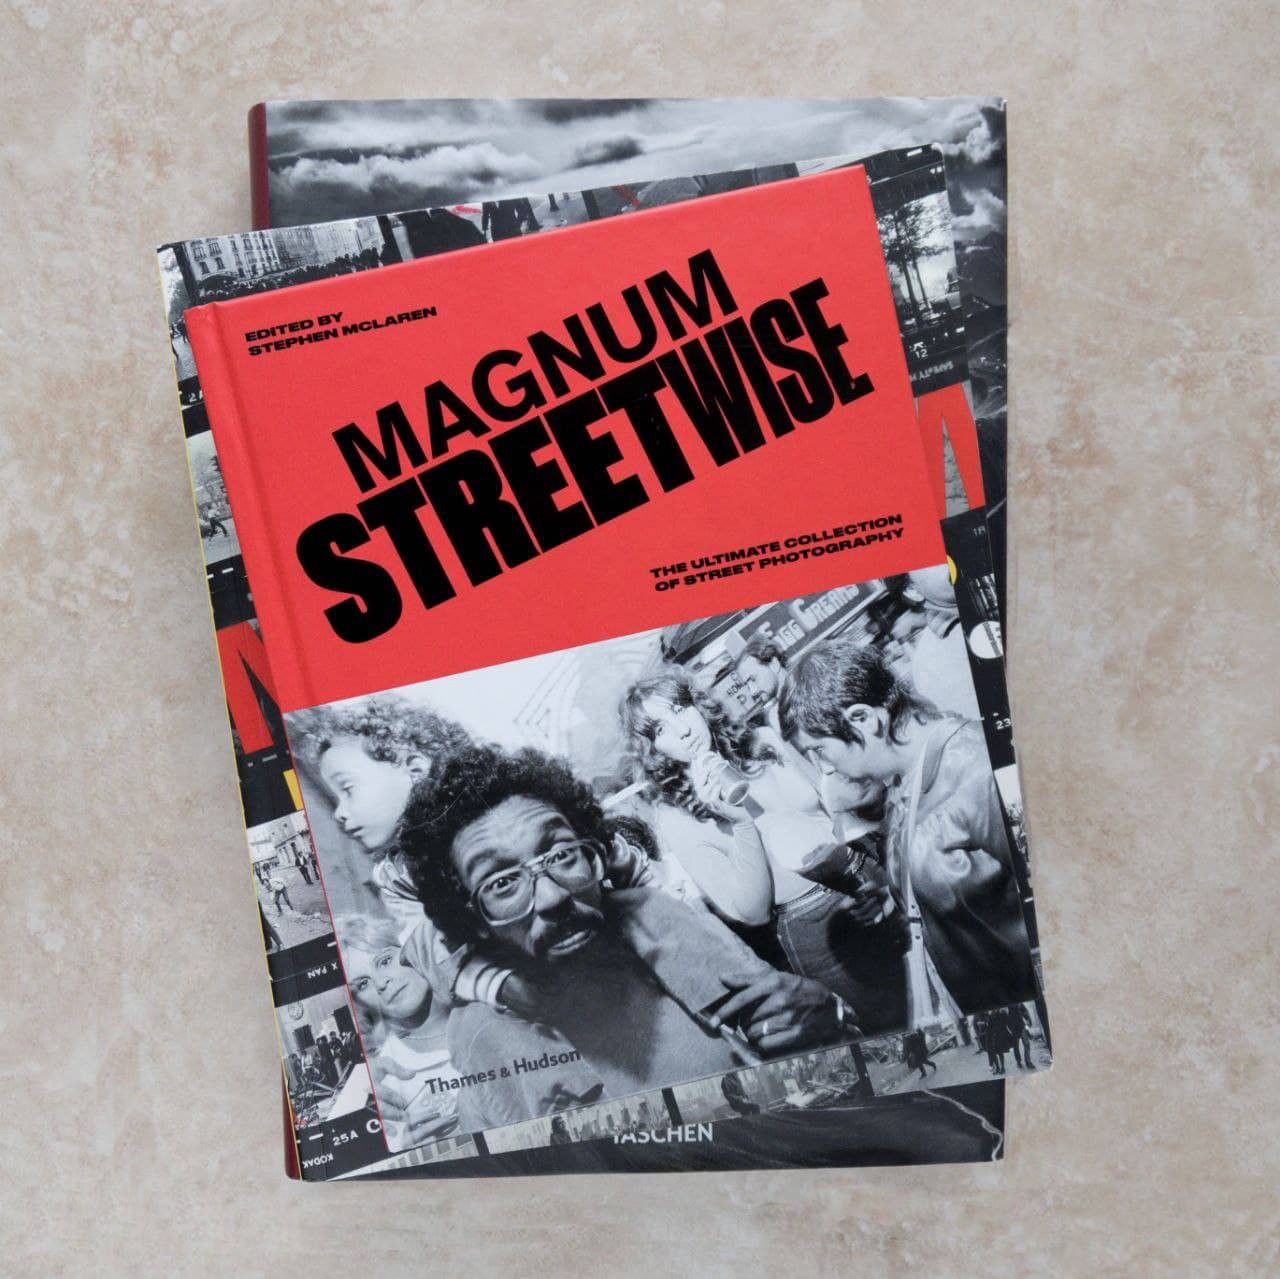 Magnum Streetwise. La Street Photography secondo la Magnum Photos.